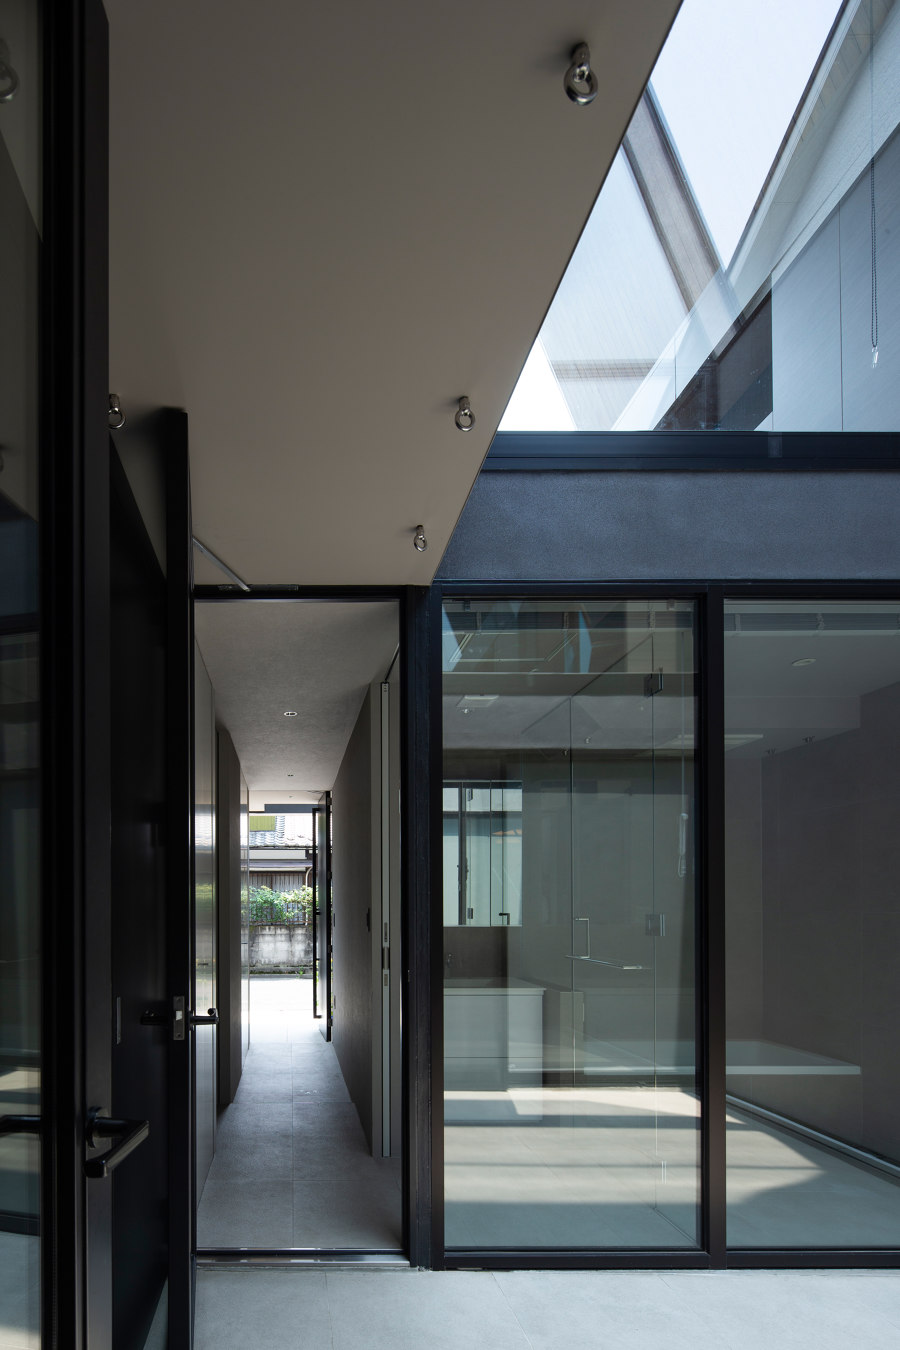 RHYTHM de APOLLO Architects & Associates | Adosados